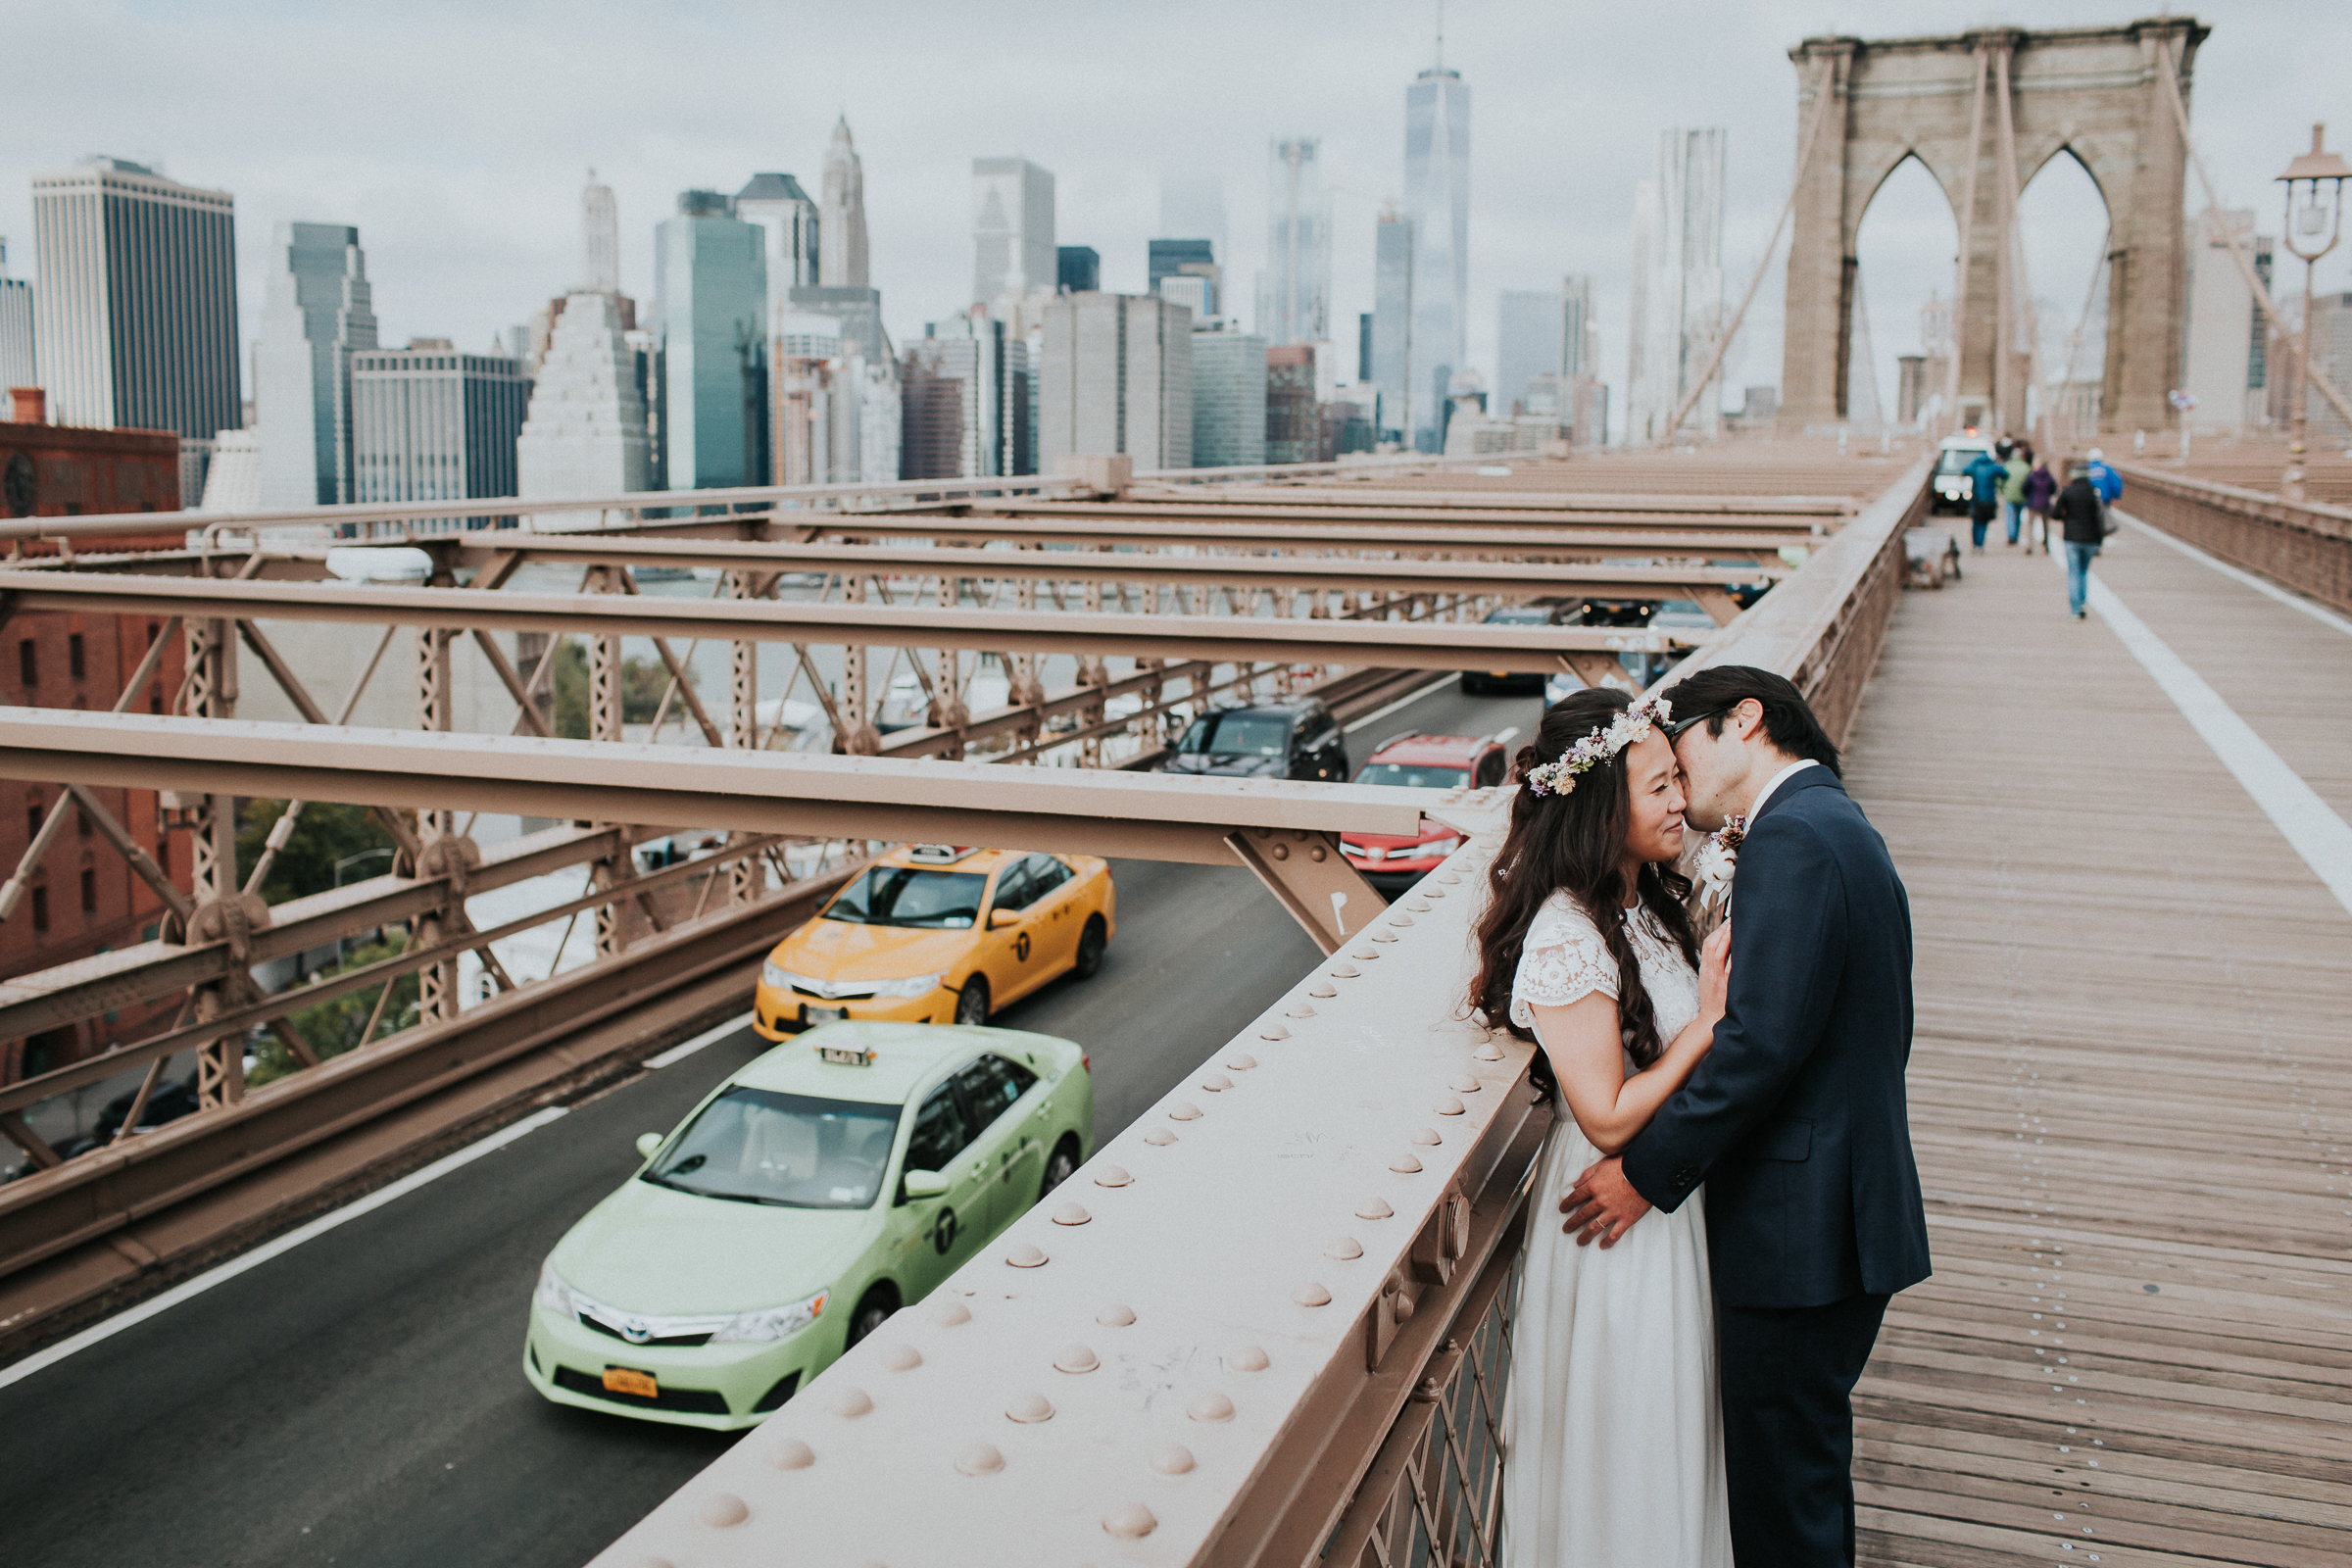 Central-Park-Brooklyn-Bridge-Dumbo-NYC-Documentary-Wedding-Photographer-25.jpg